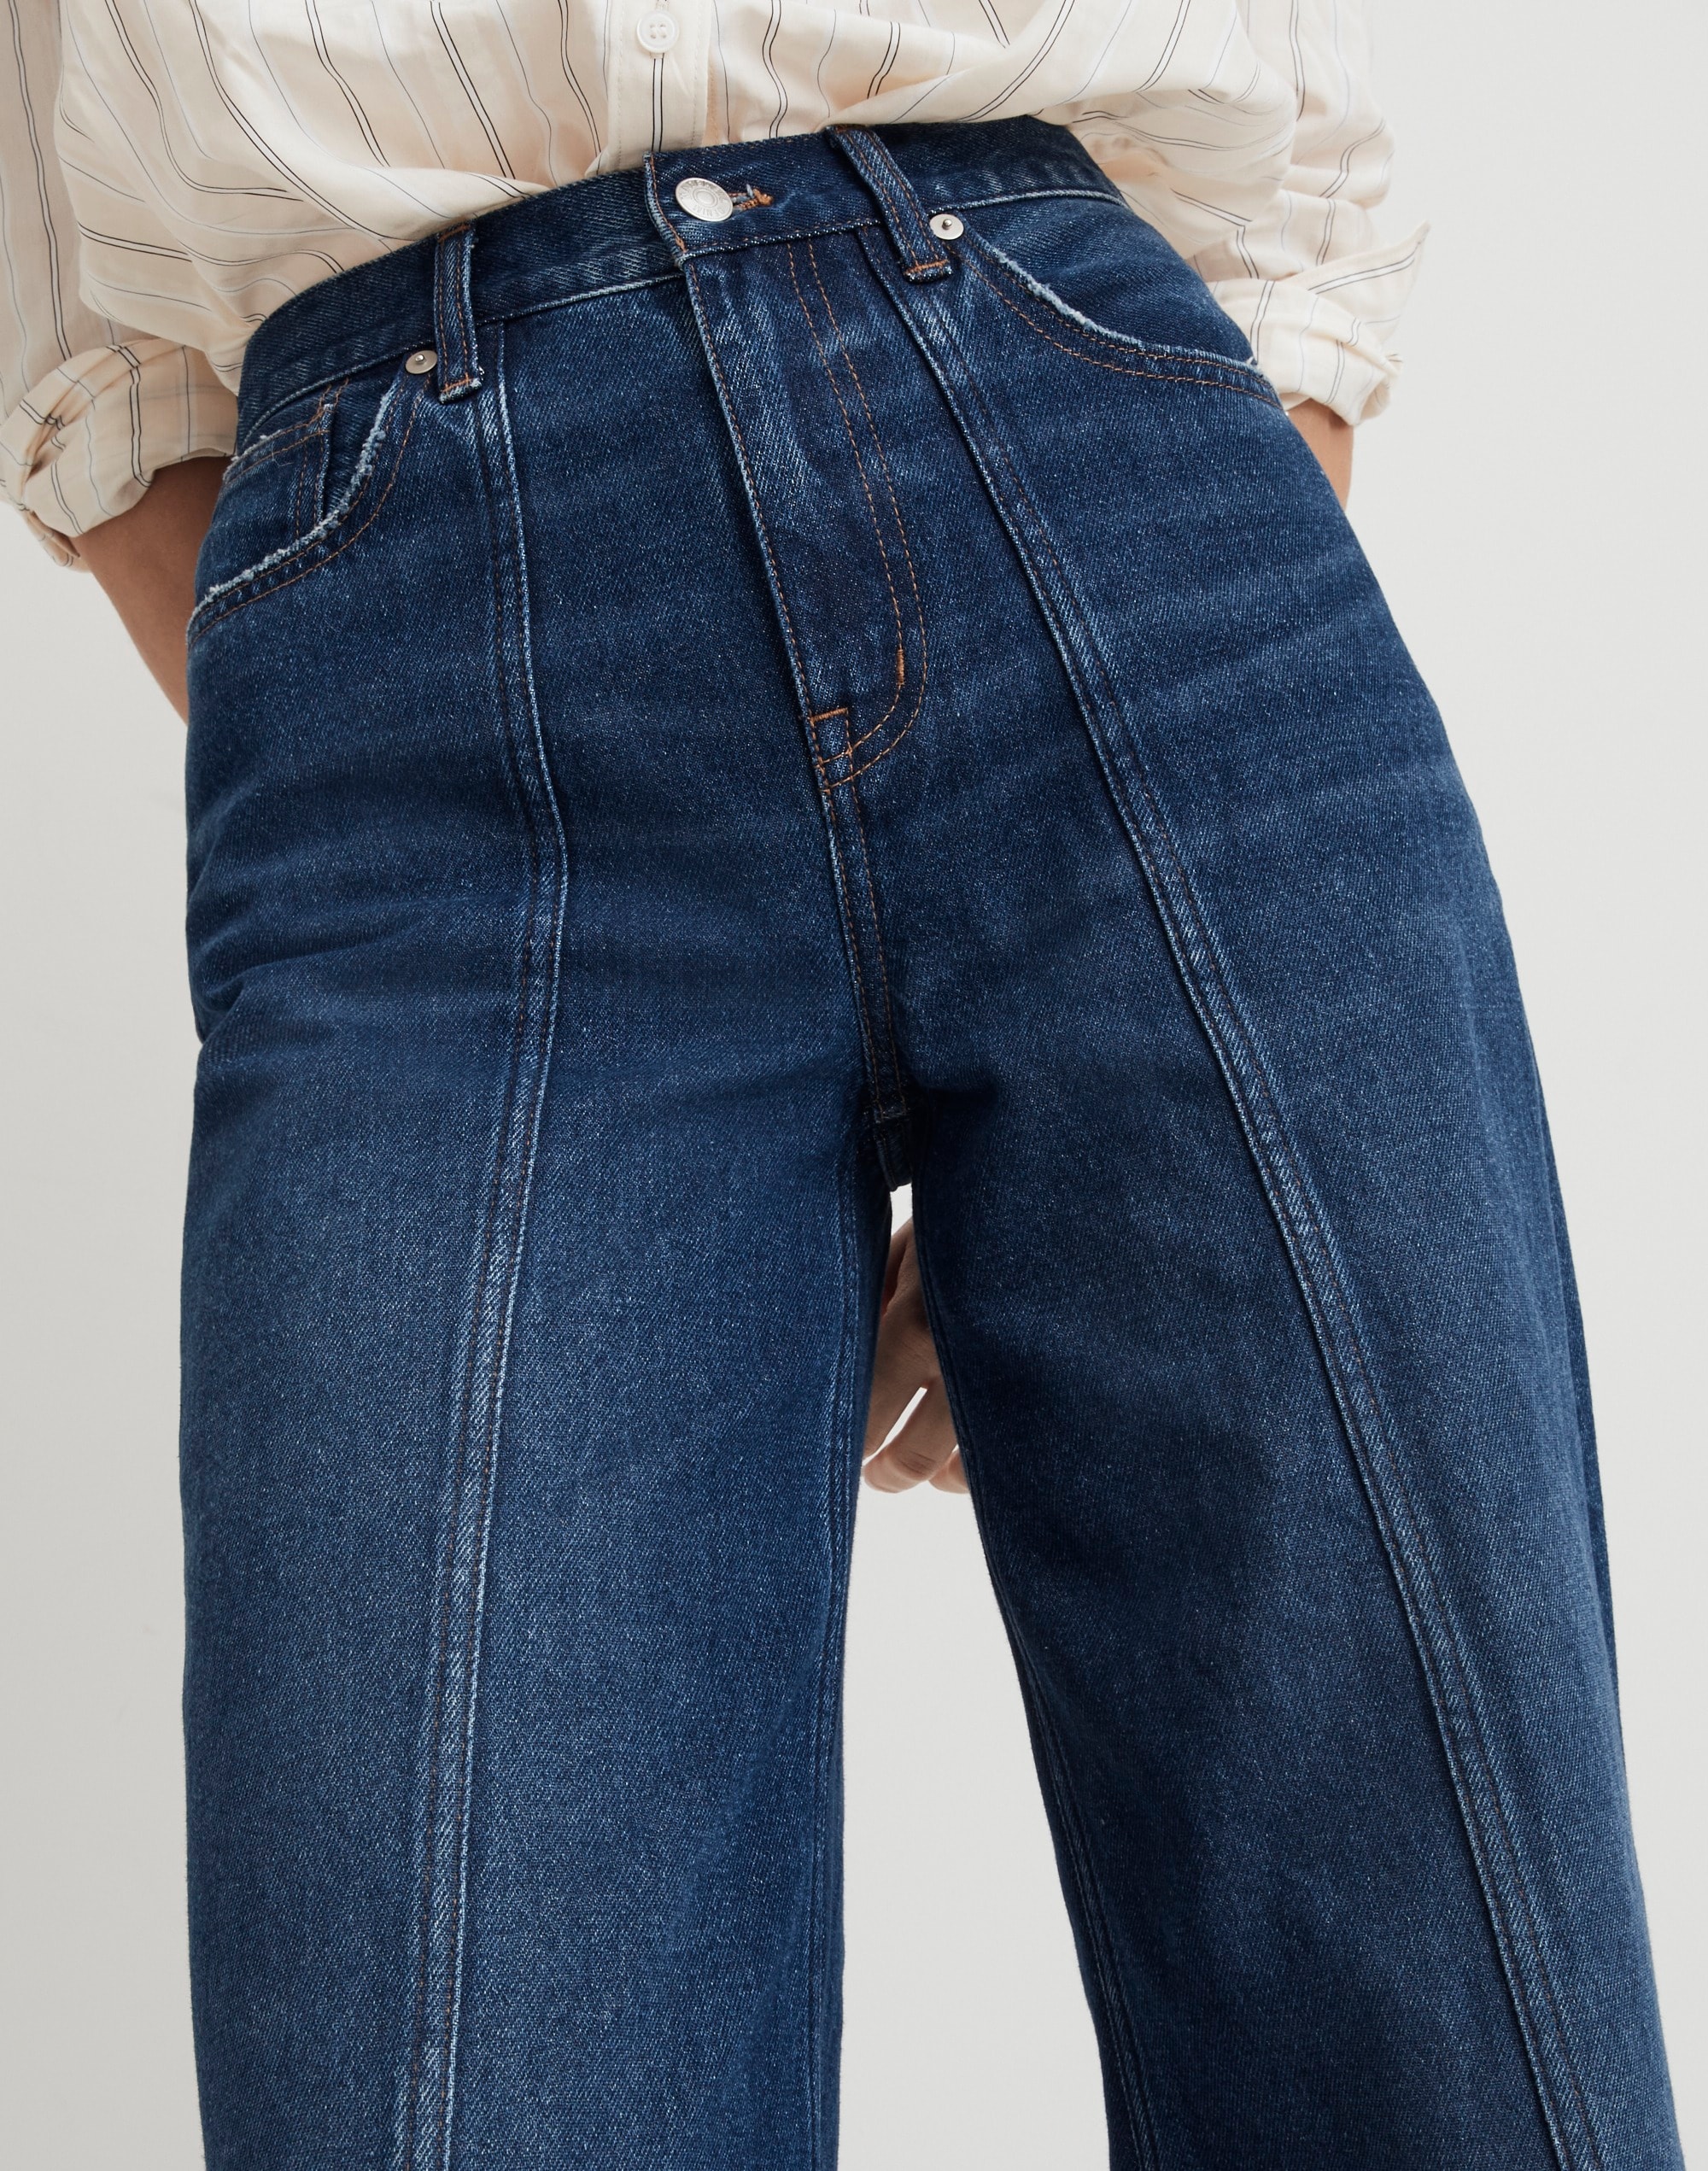 Superwide-Leg Jeans Carrington Wash: Twisted-Seam Edition